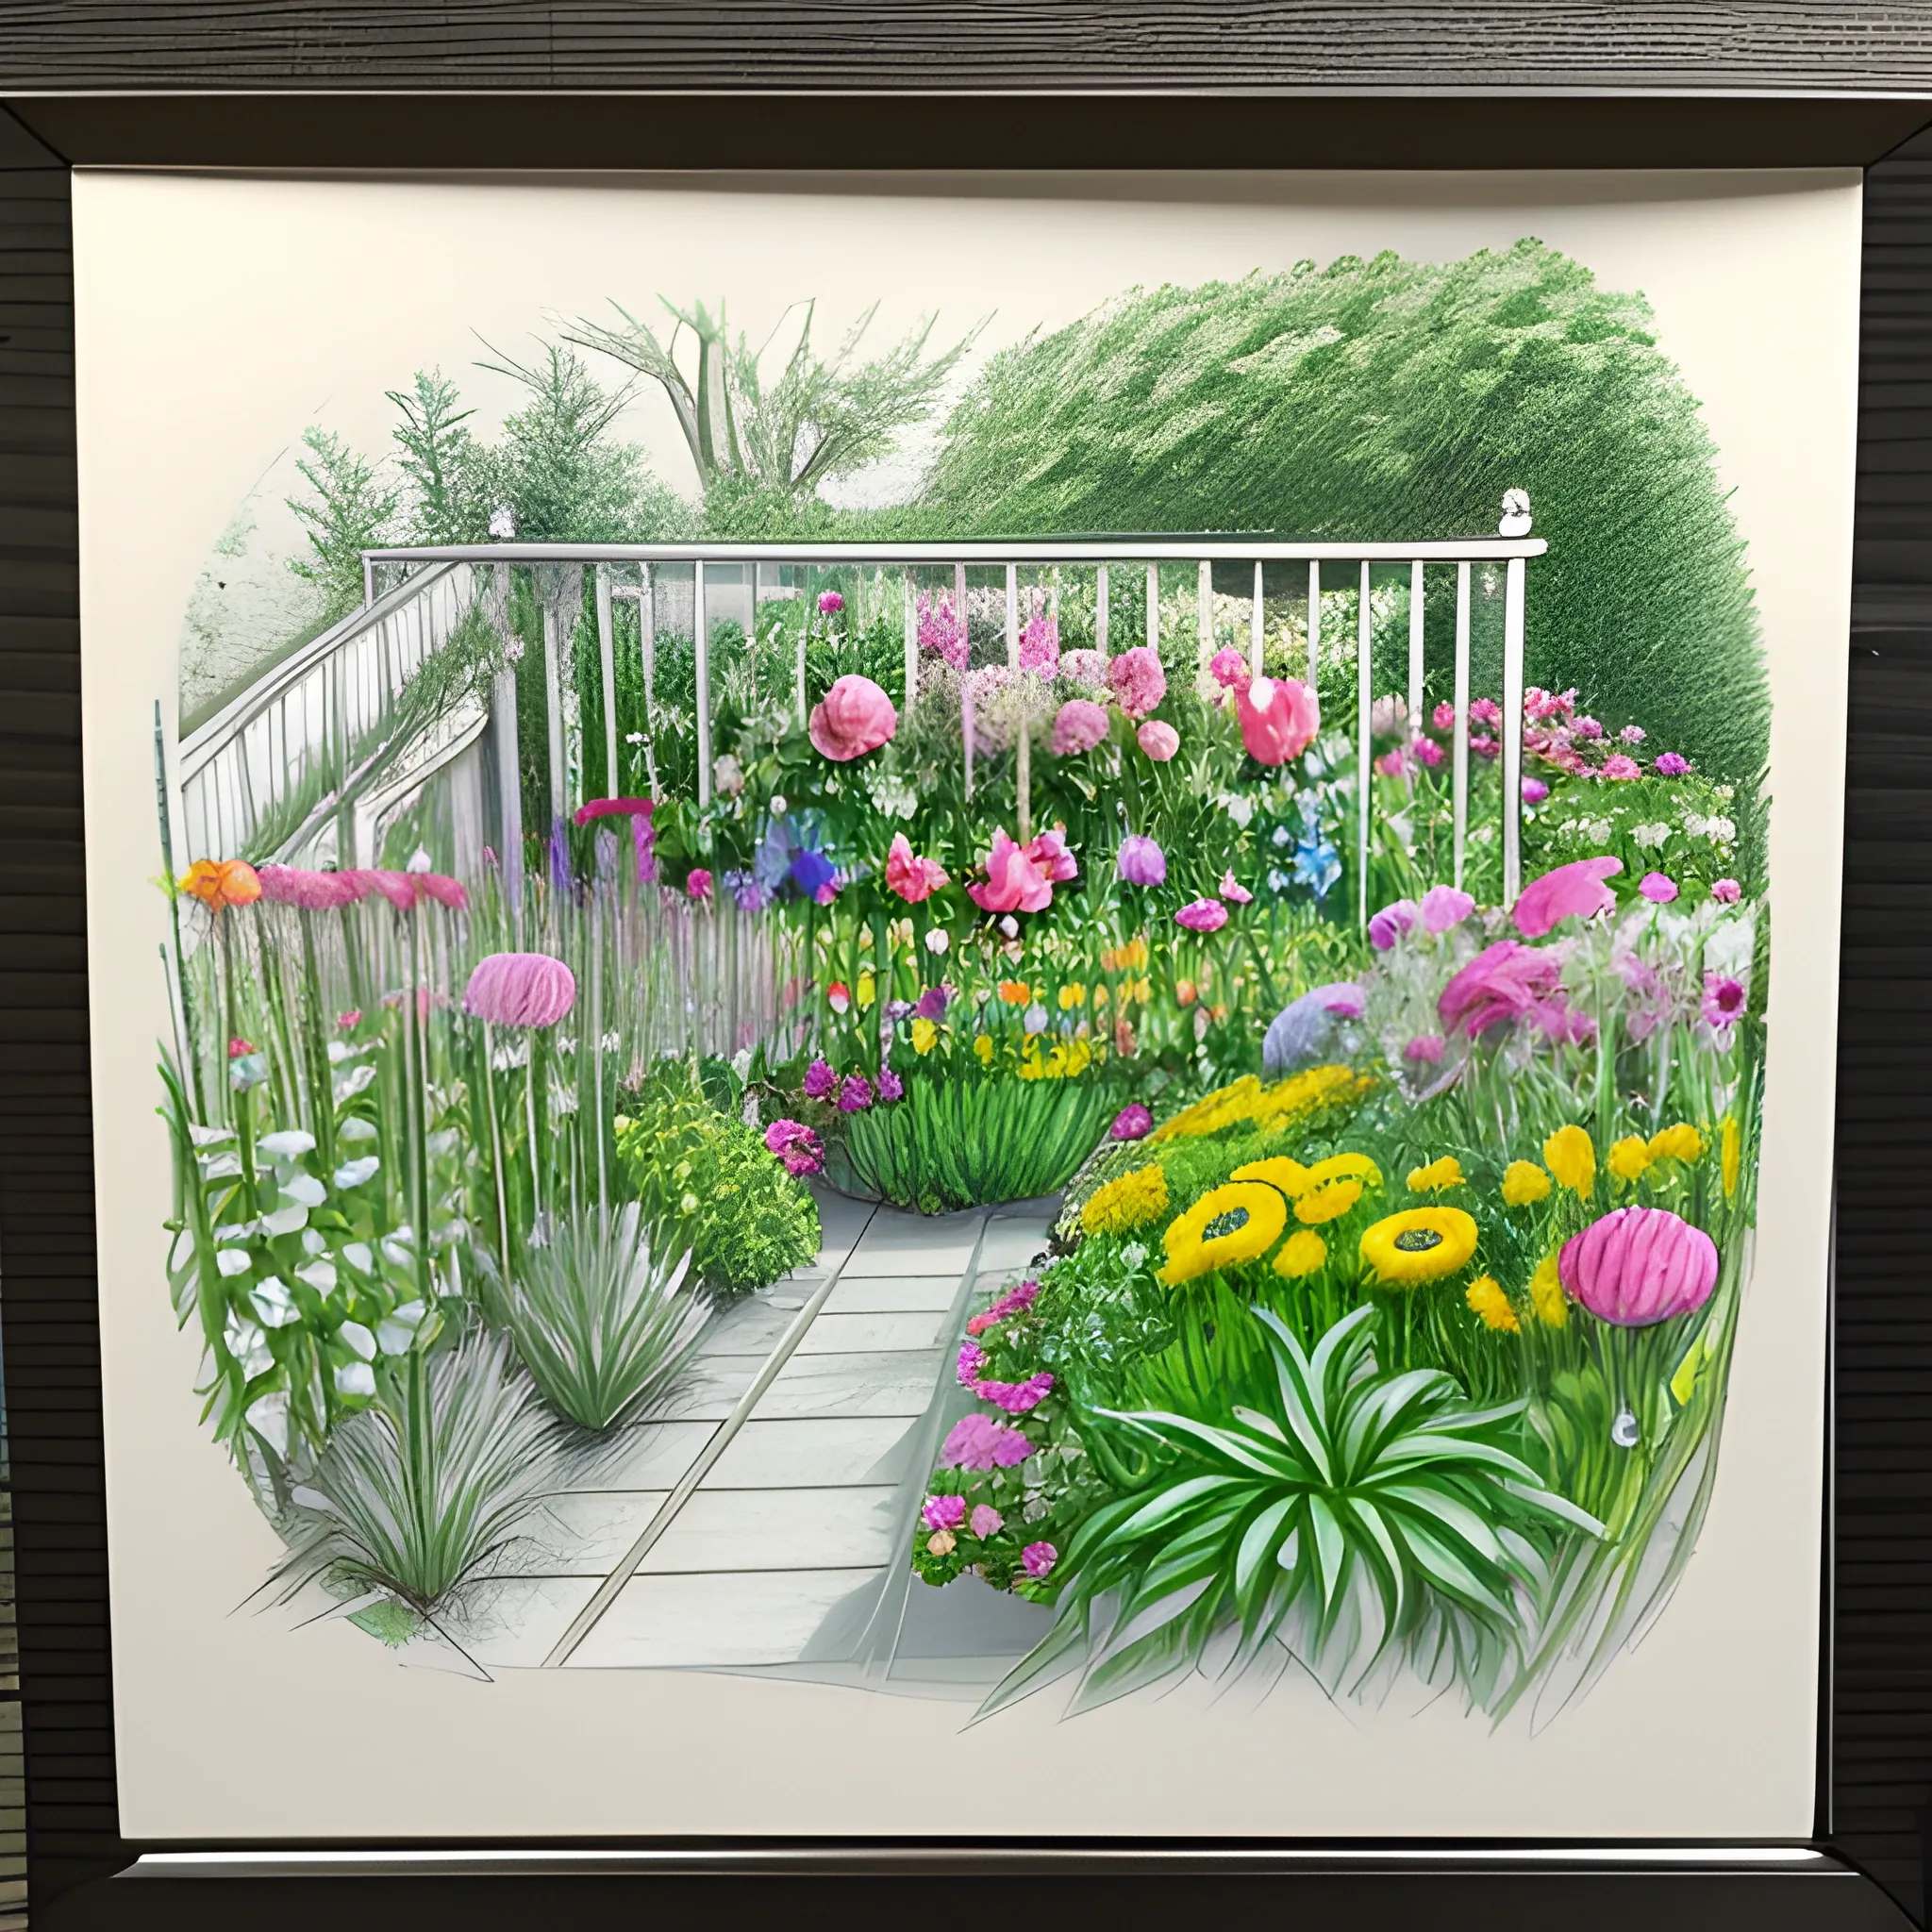 174,046 3d Floral Pattern Images, Stock Photos & Vectors | Shutterstock